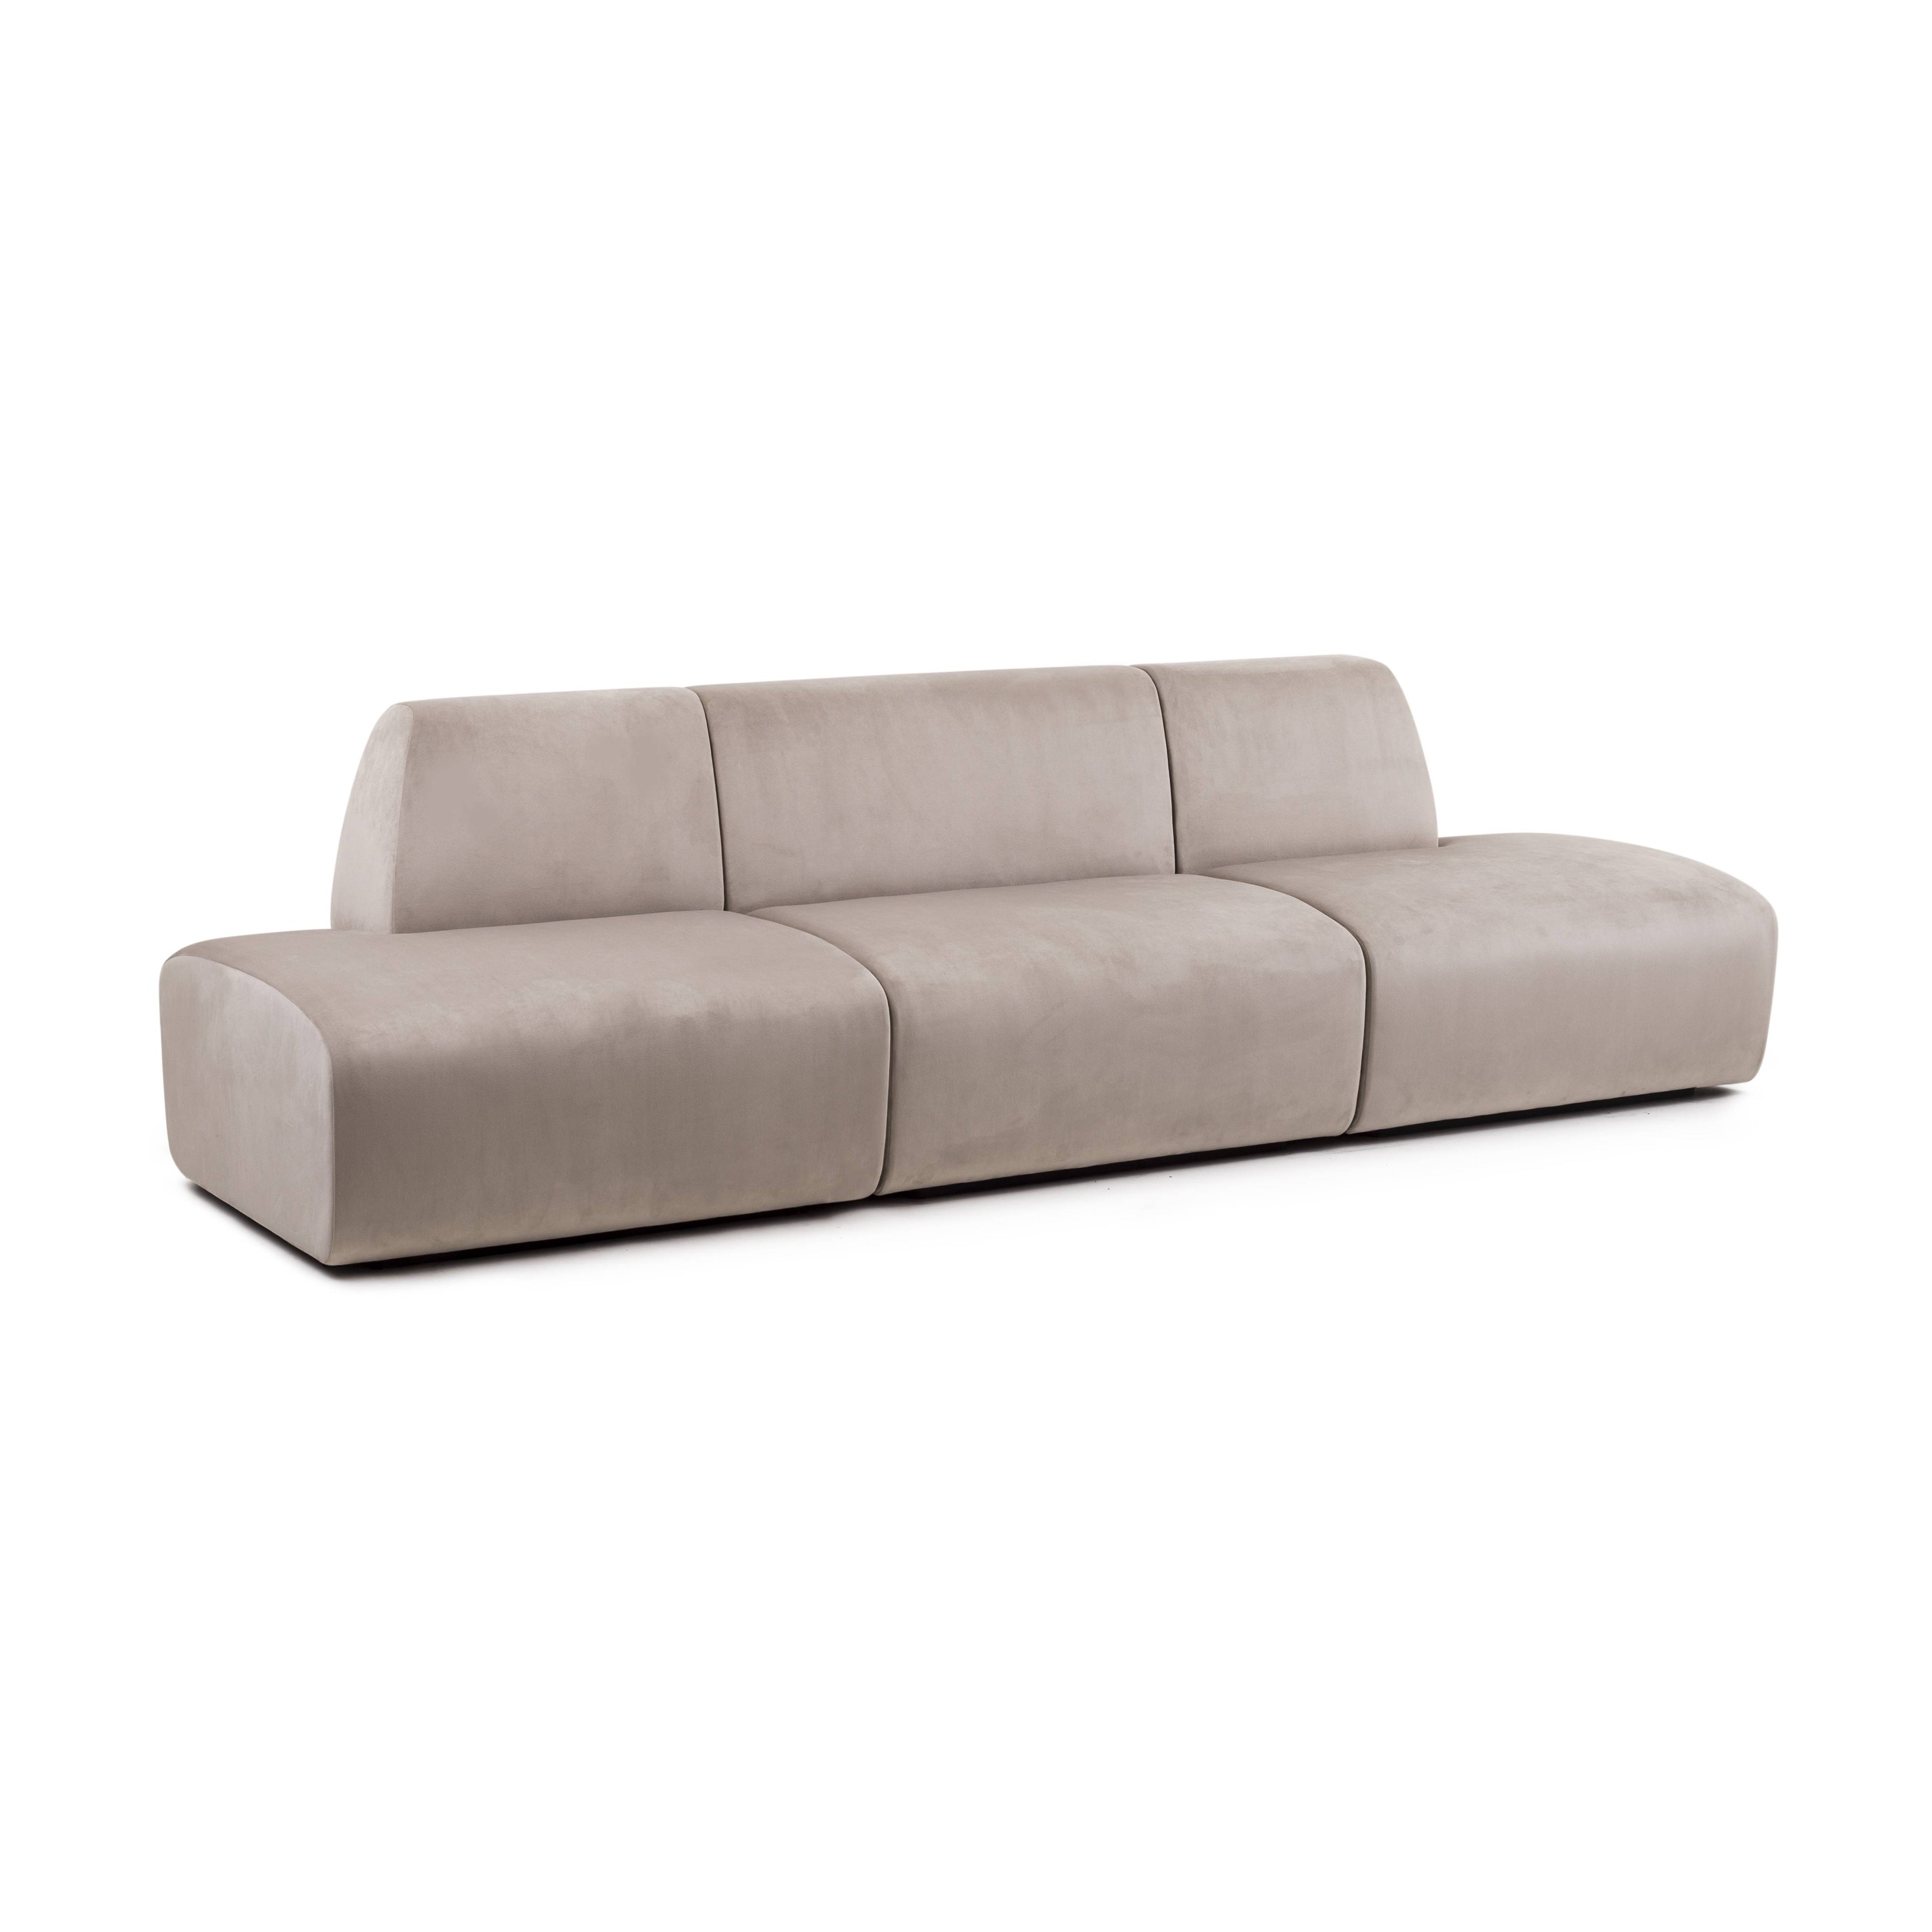 Infinity Modular Sofa: Composition 1